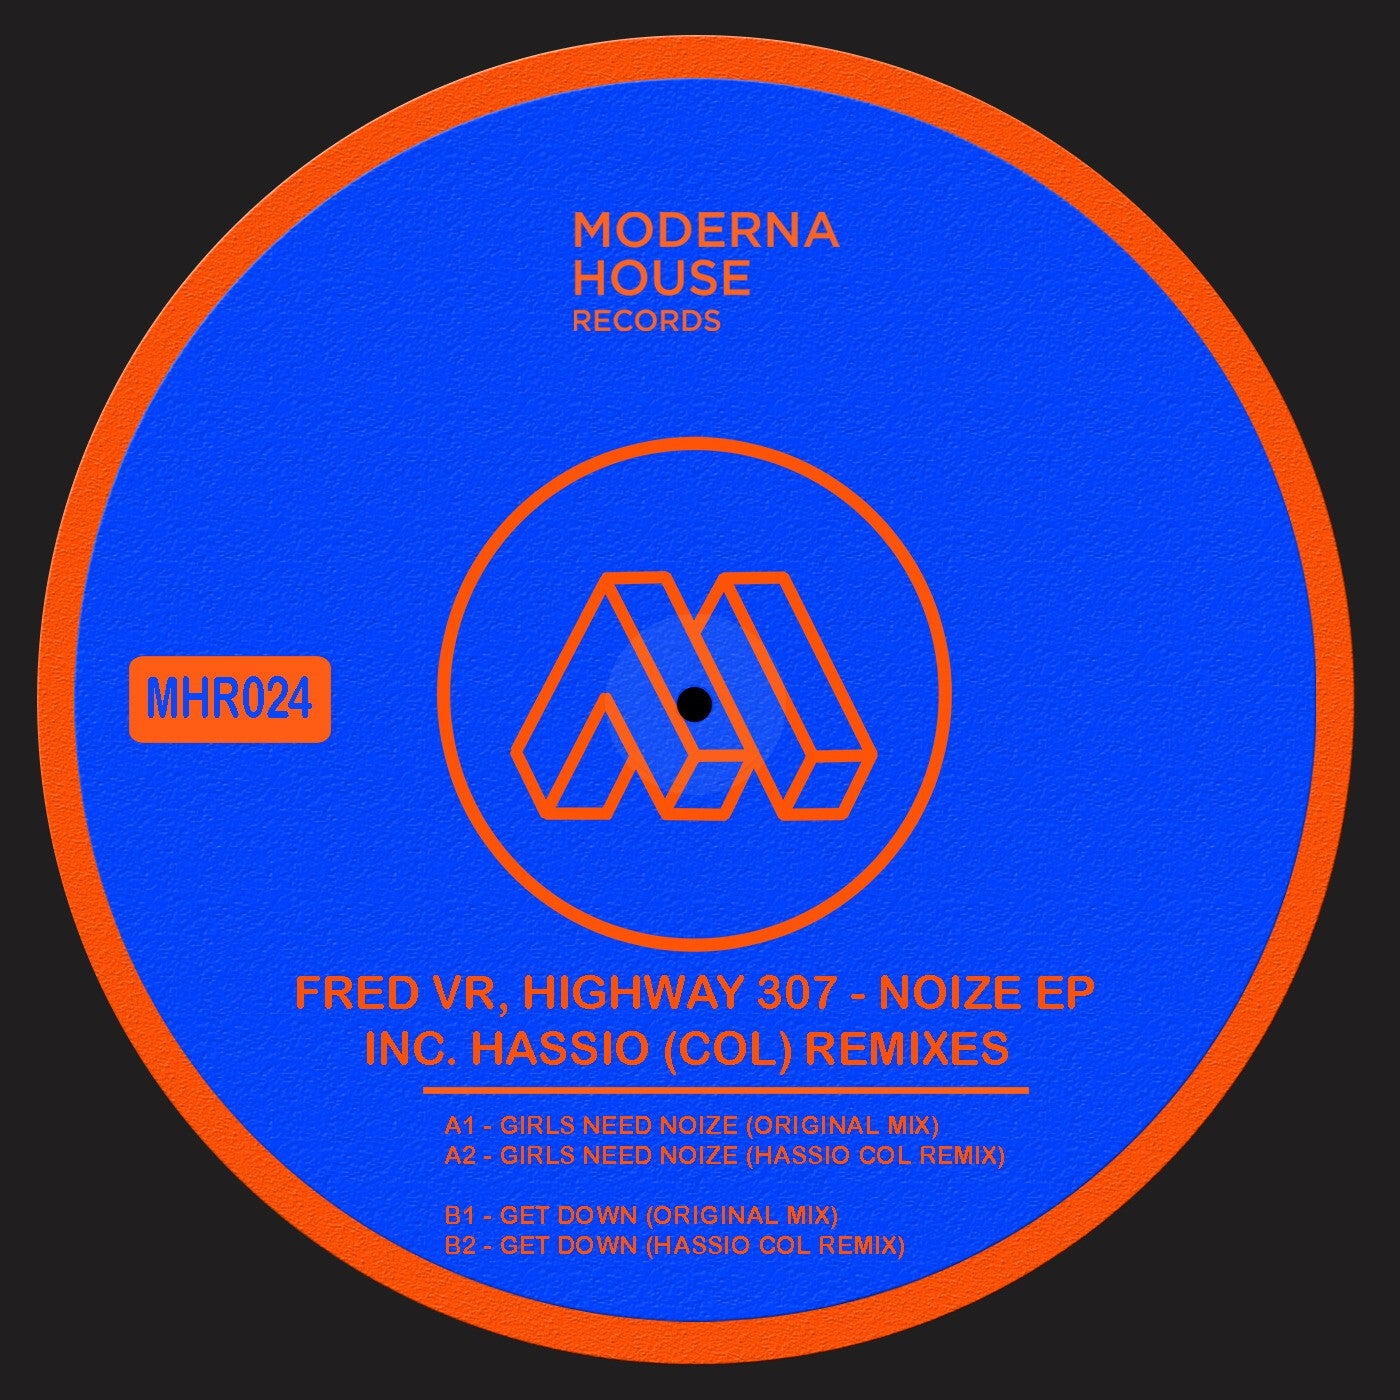 Moderna House Records Music & Downloads on Beatport